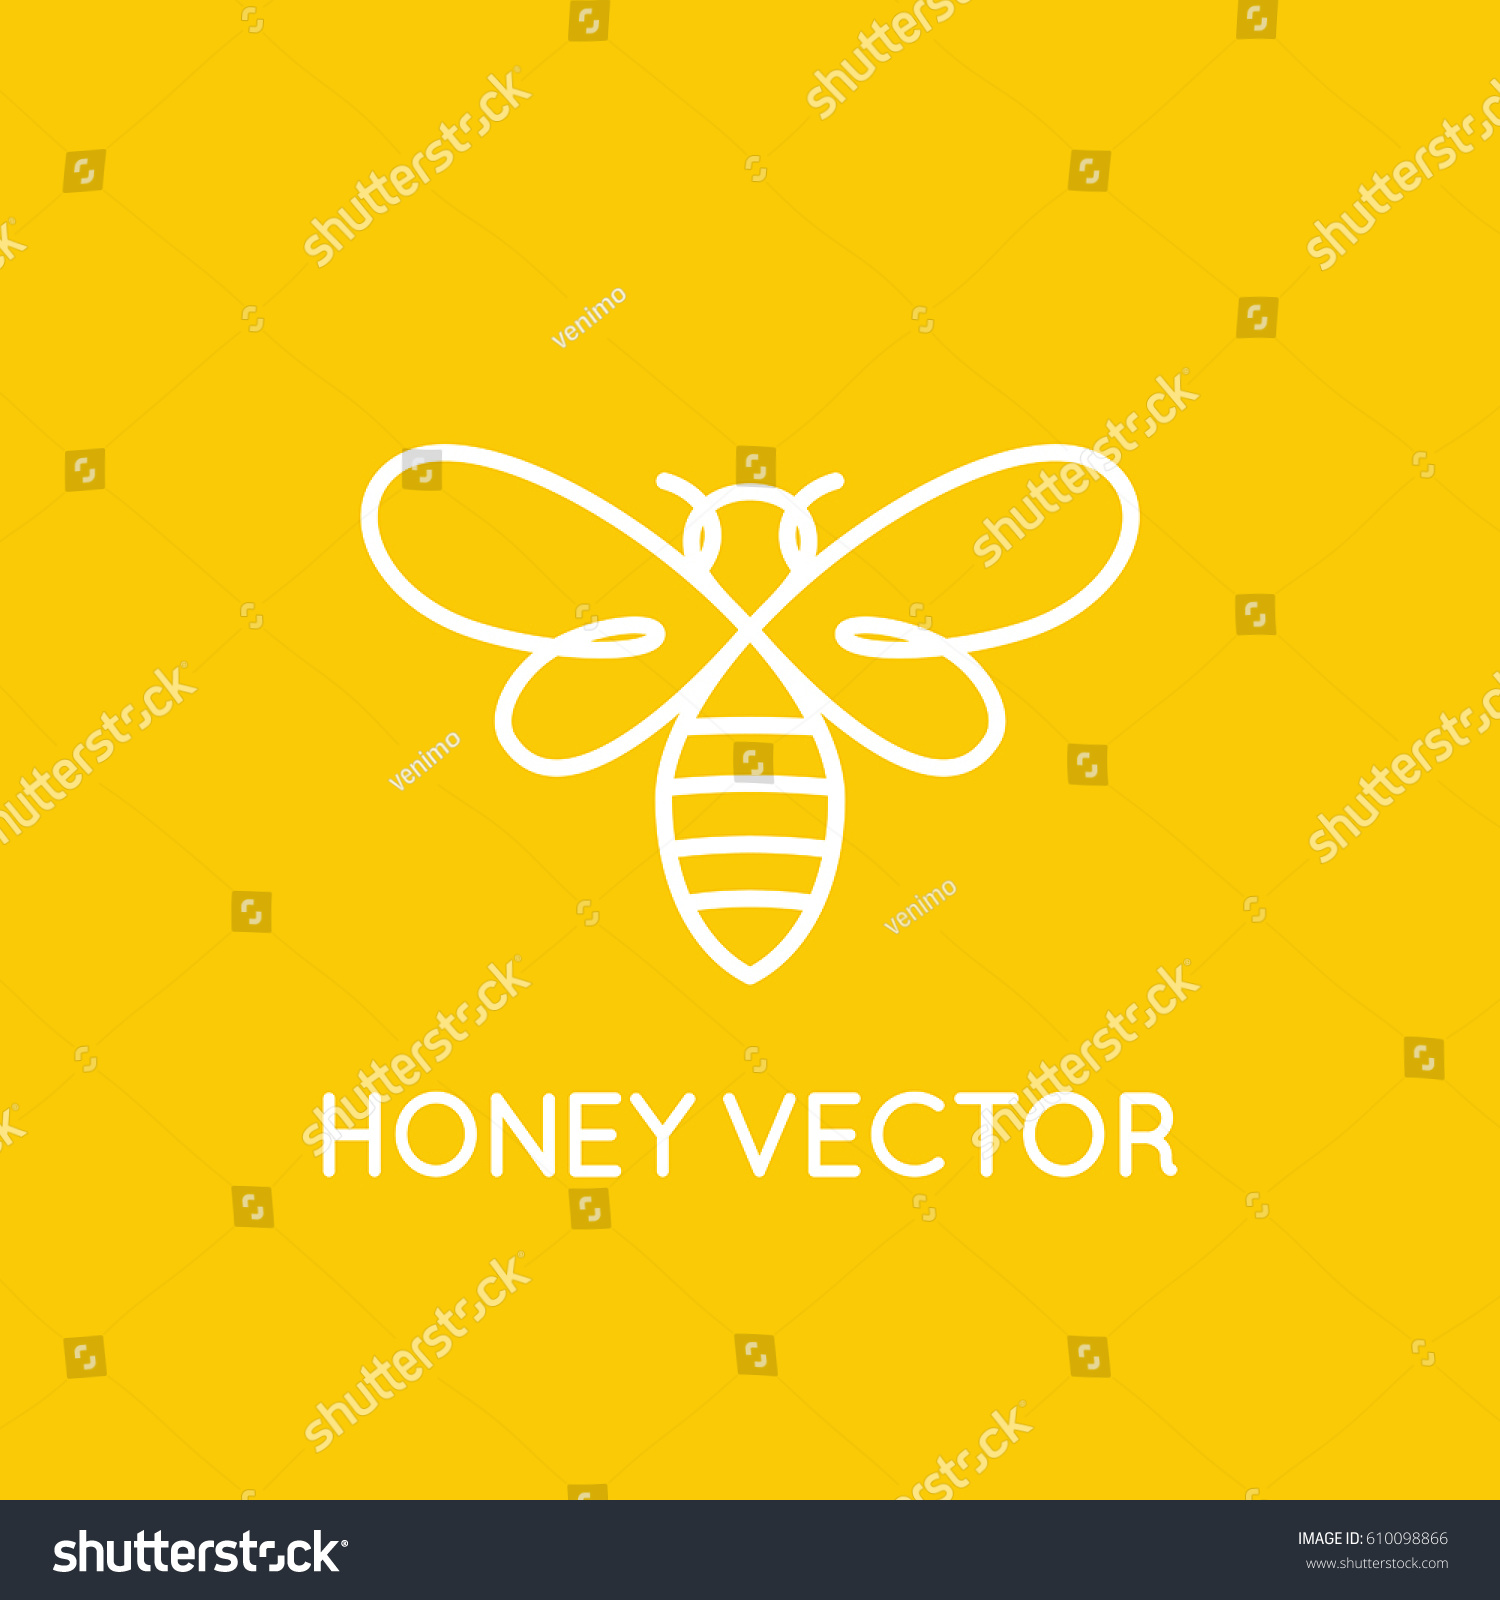 Edit Vectors Free Online - Vector logo | Shutterstock Editor